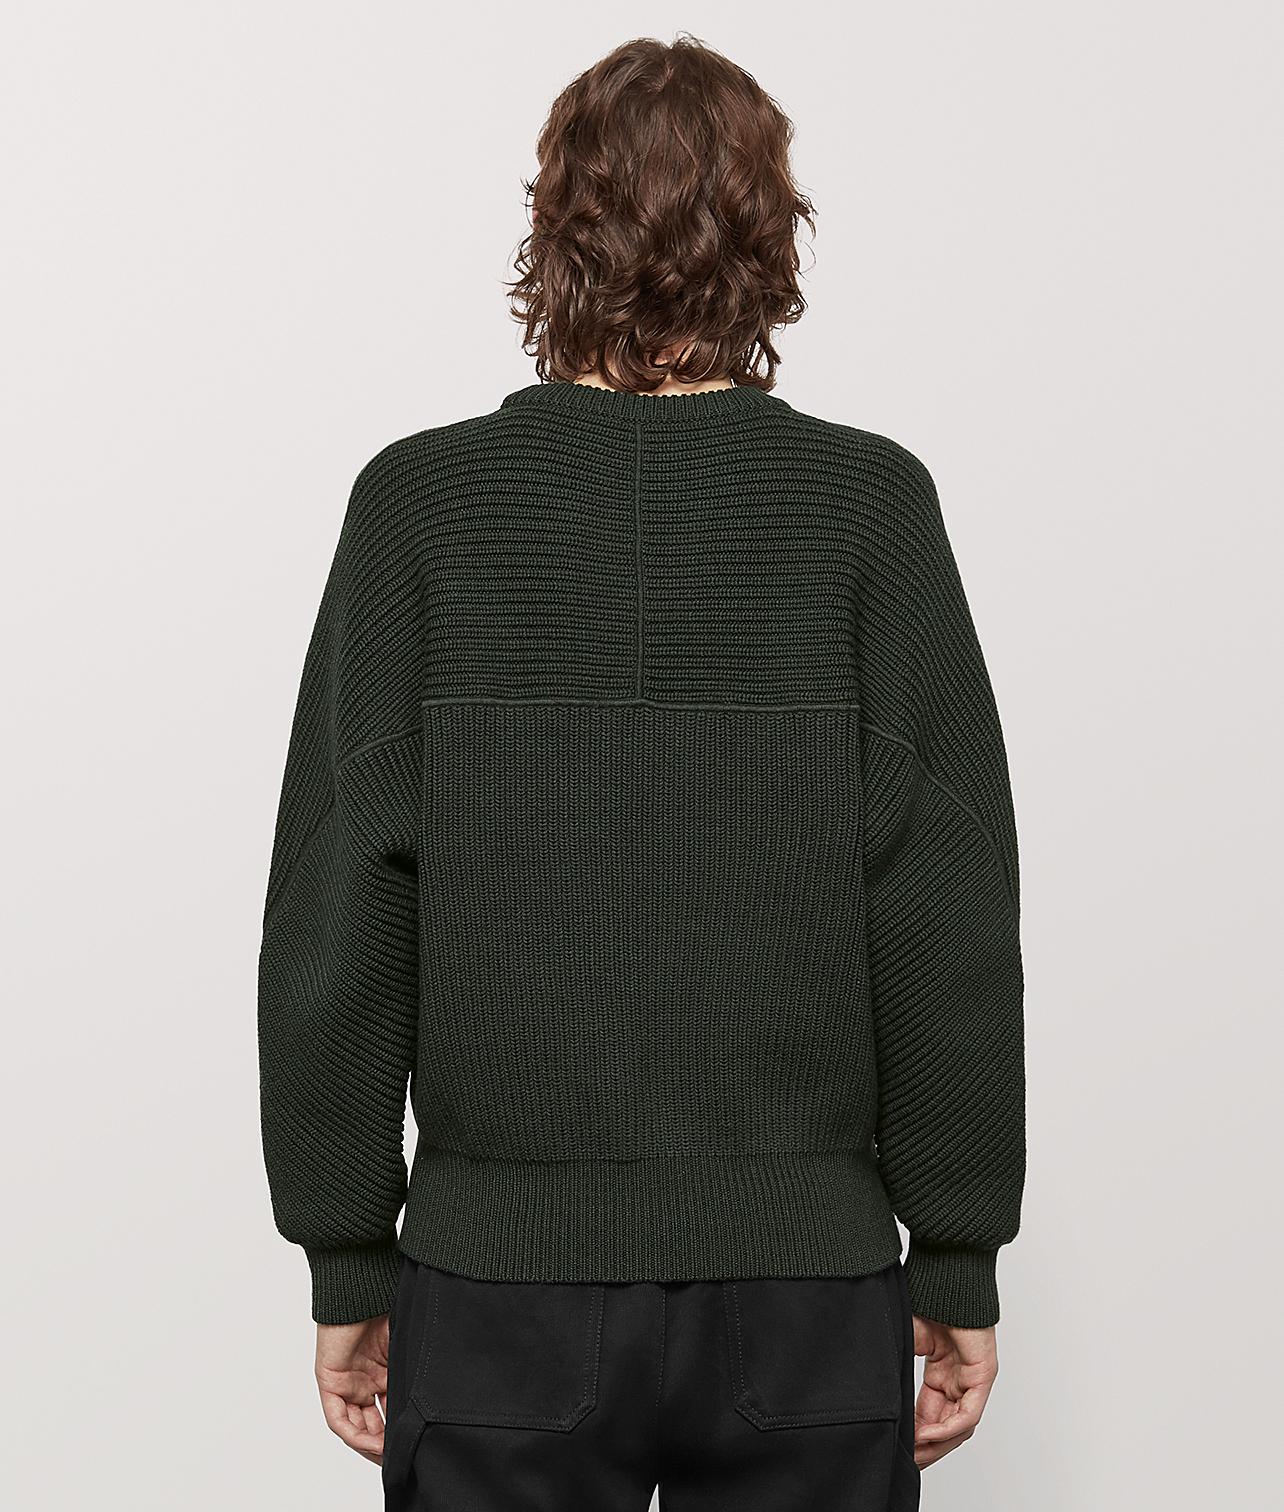 Bottega Veneta Wool Sweater in Green for Men - Lyst